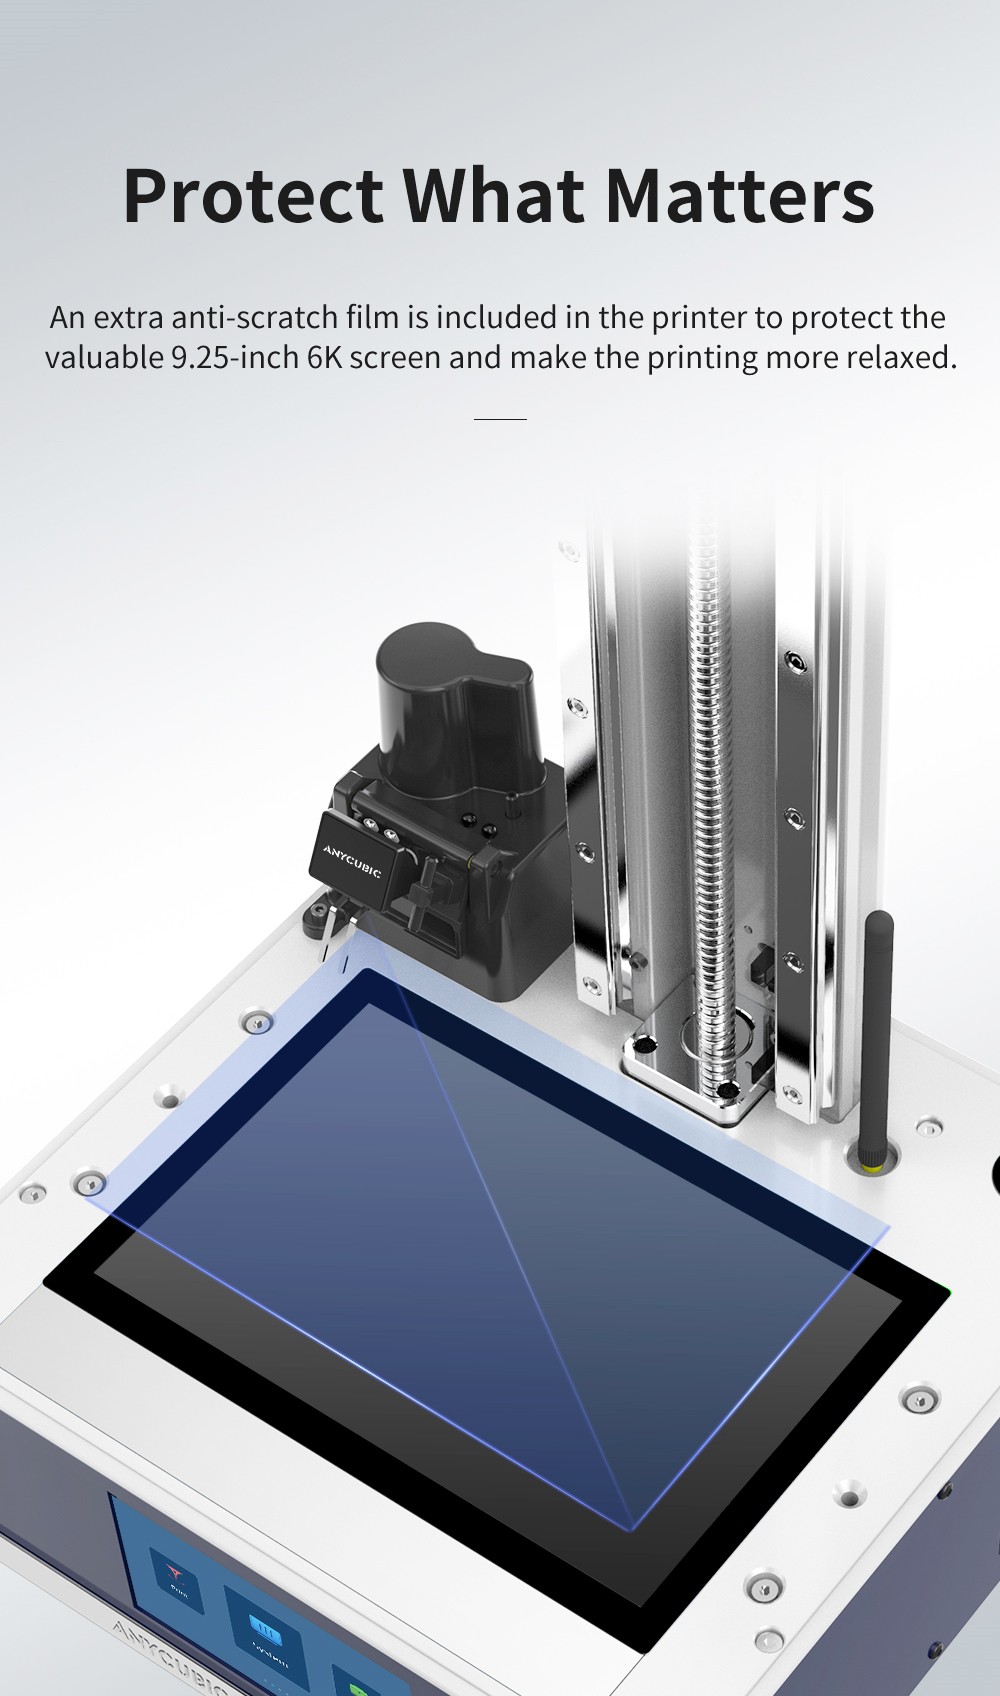 Anycubic Photon M3 Max 3D Printer, 13.6 inch 7K Monochrome LCD Display, Printing Size 300x298x164mm